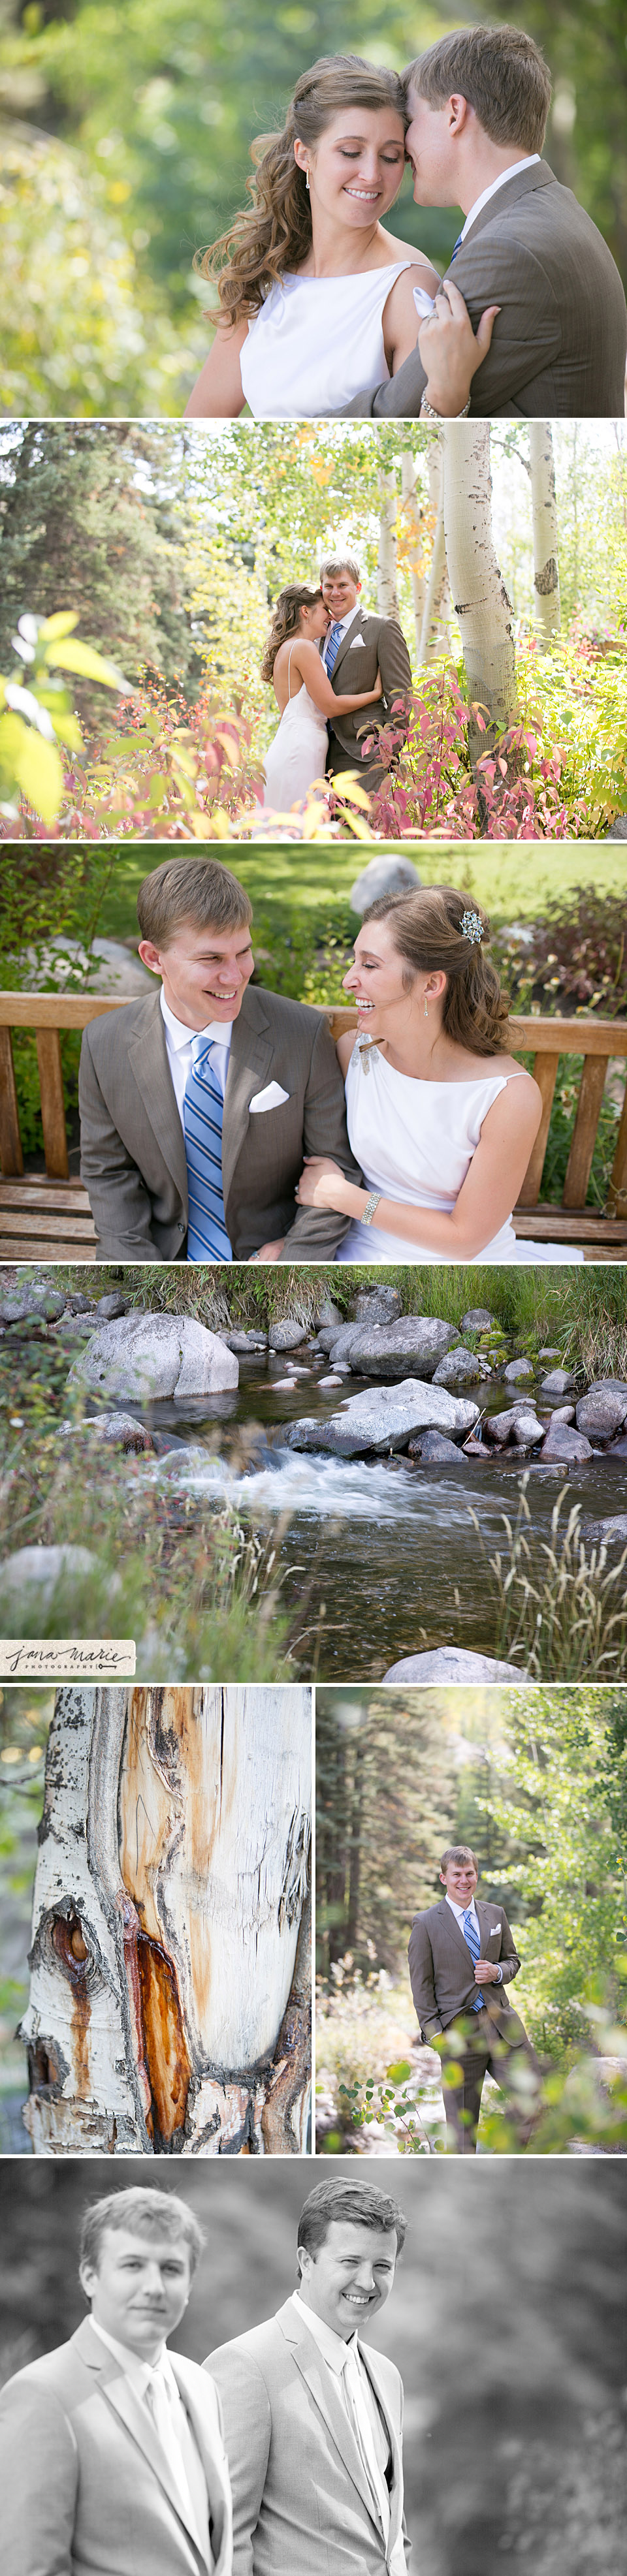 Colorado wedding photographer, Jana Marler, Creeks, wedding images, Aspen trees